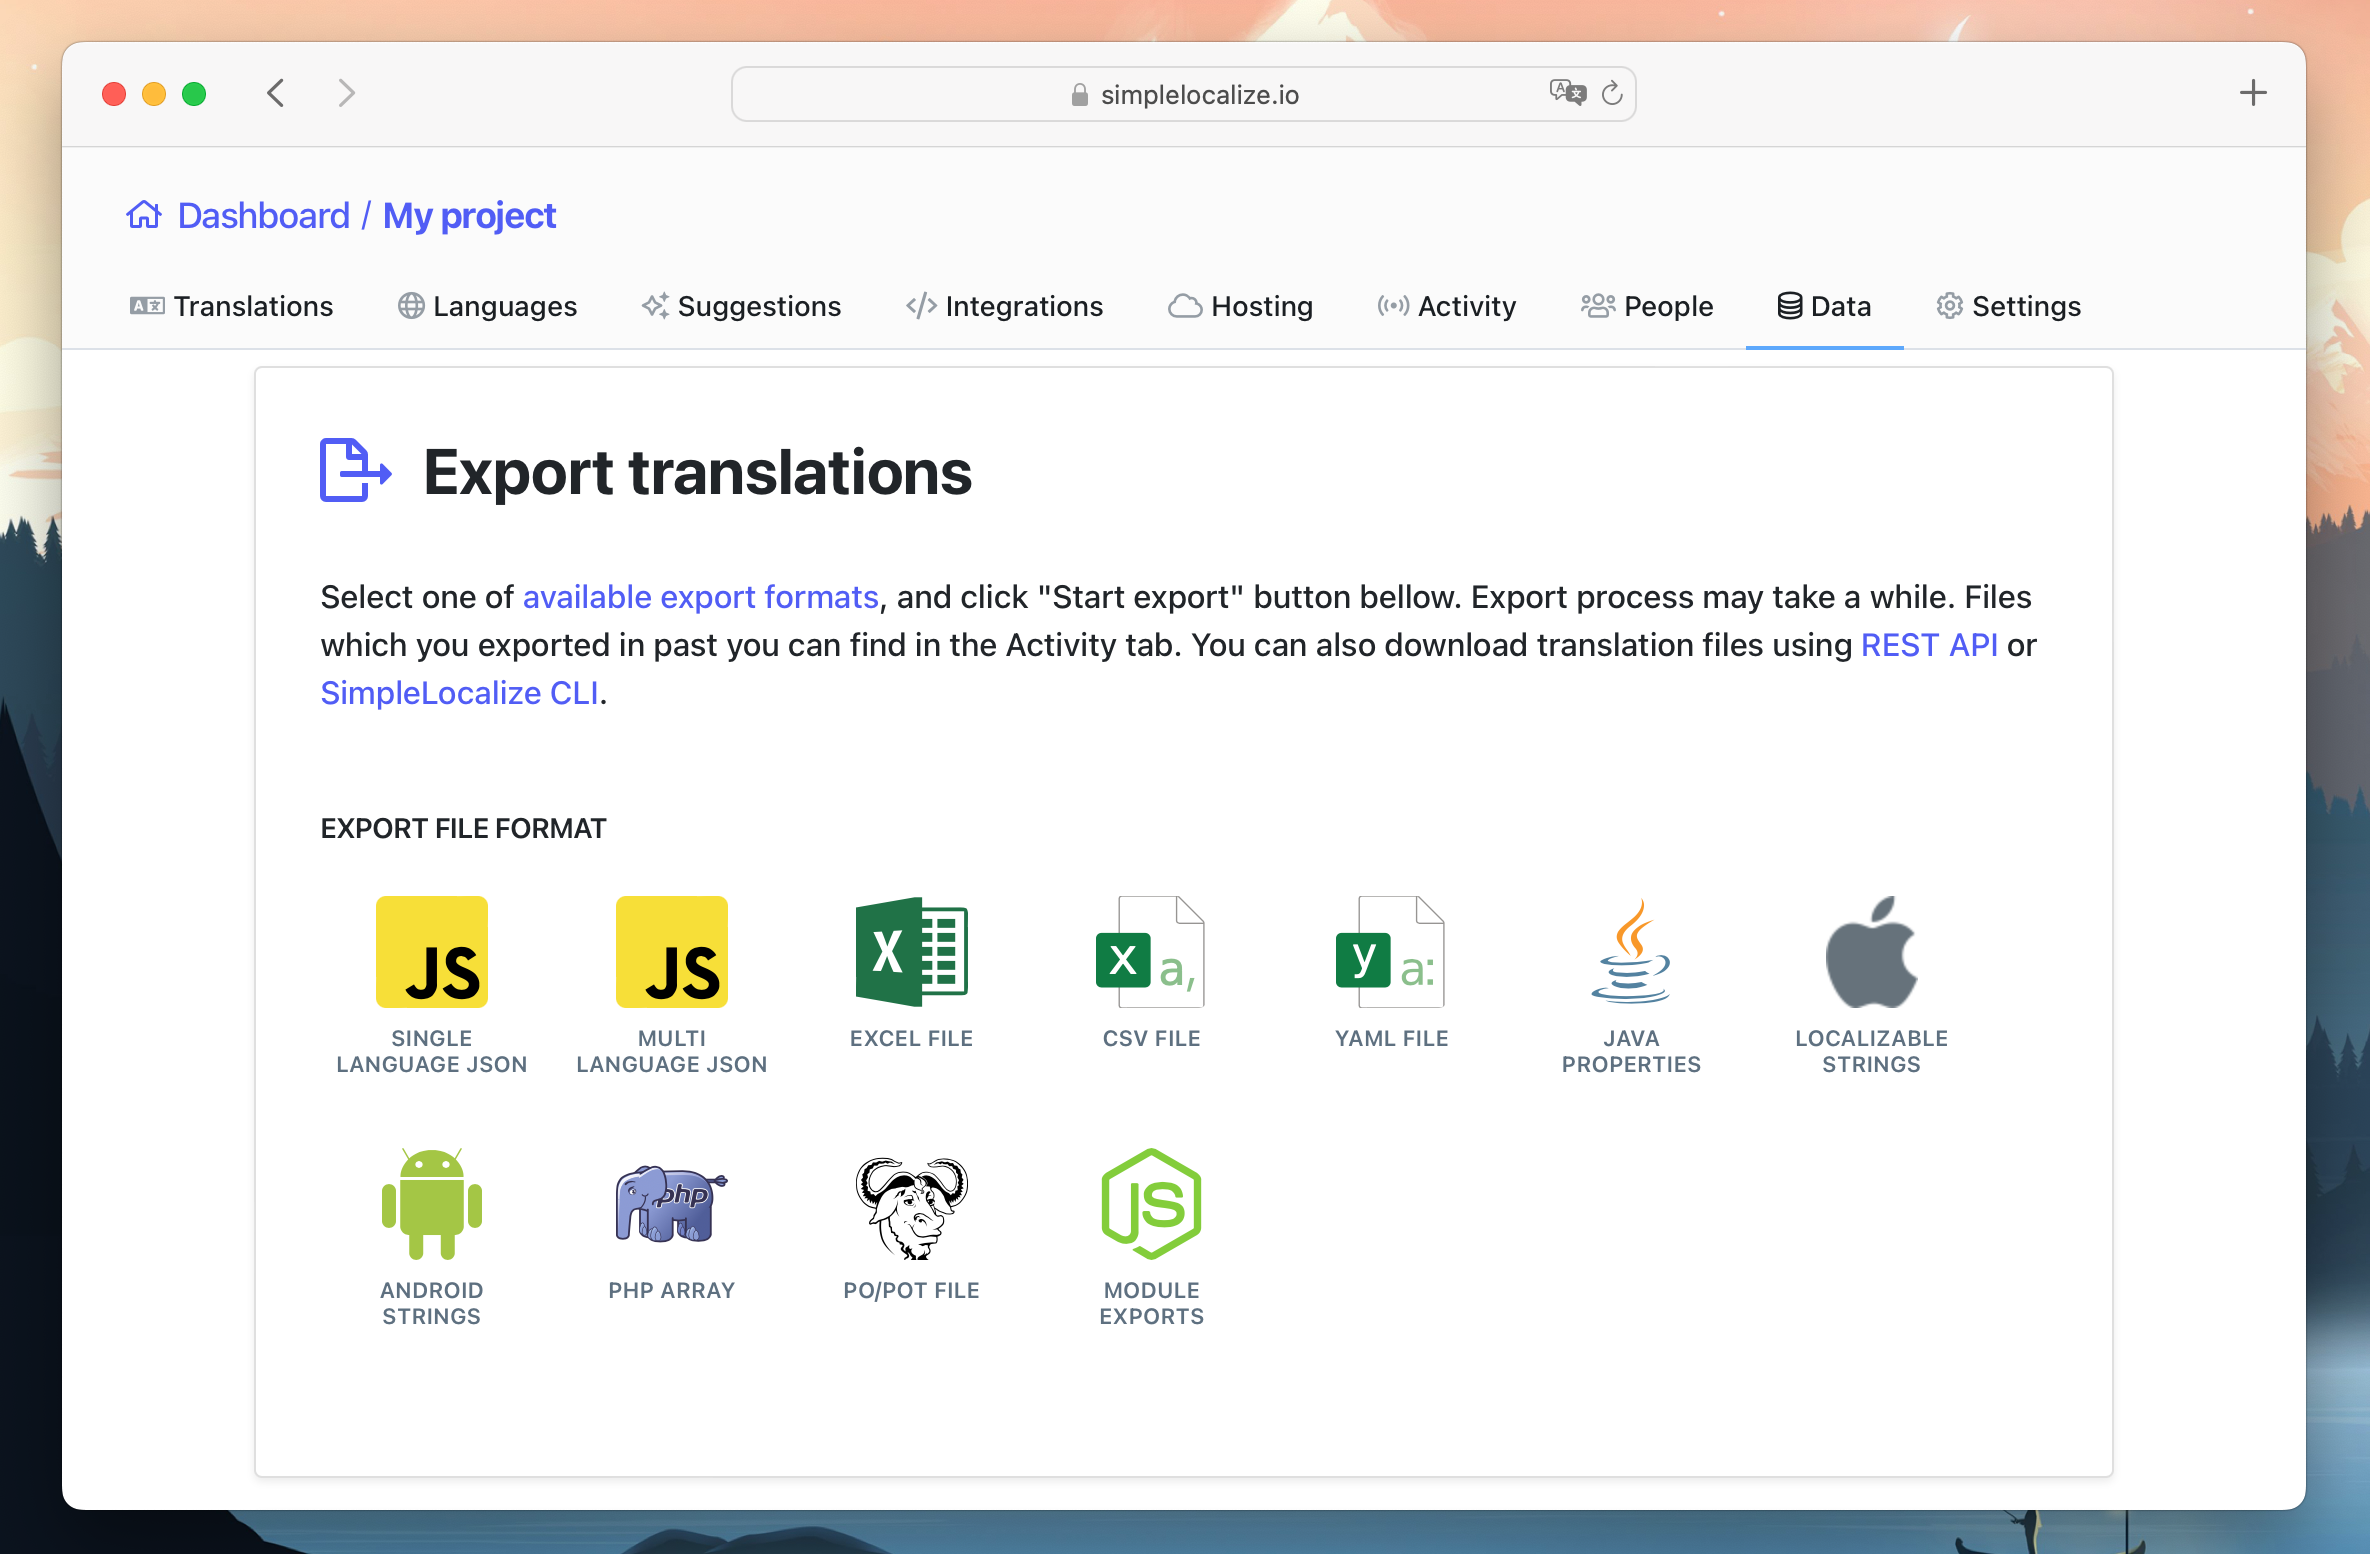 Exporting translation files